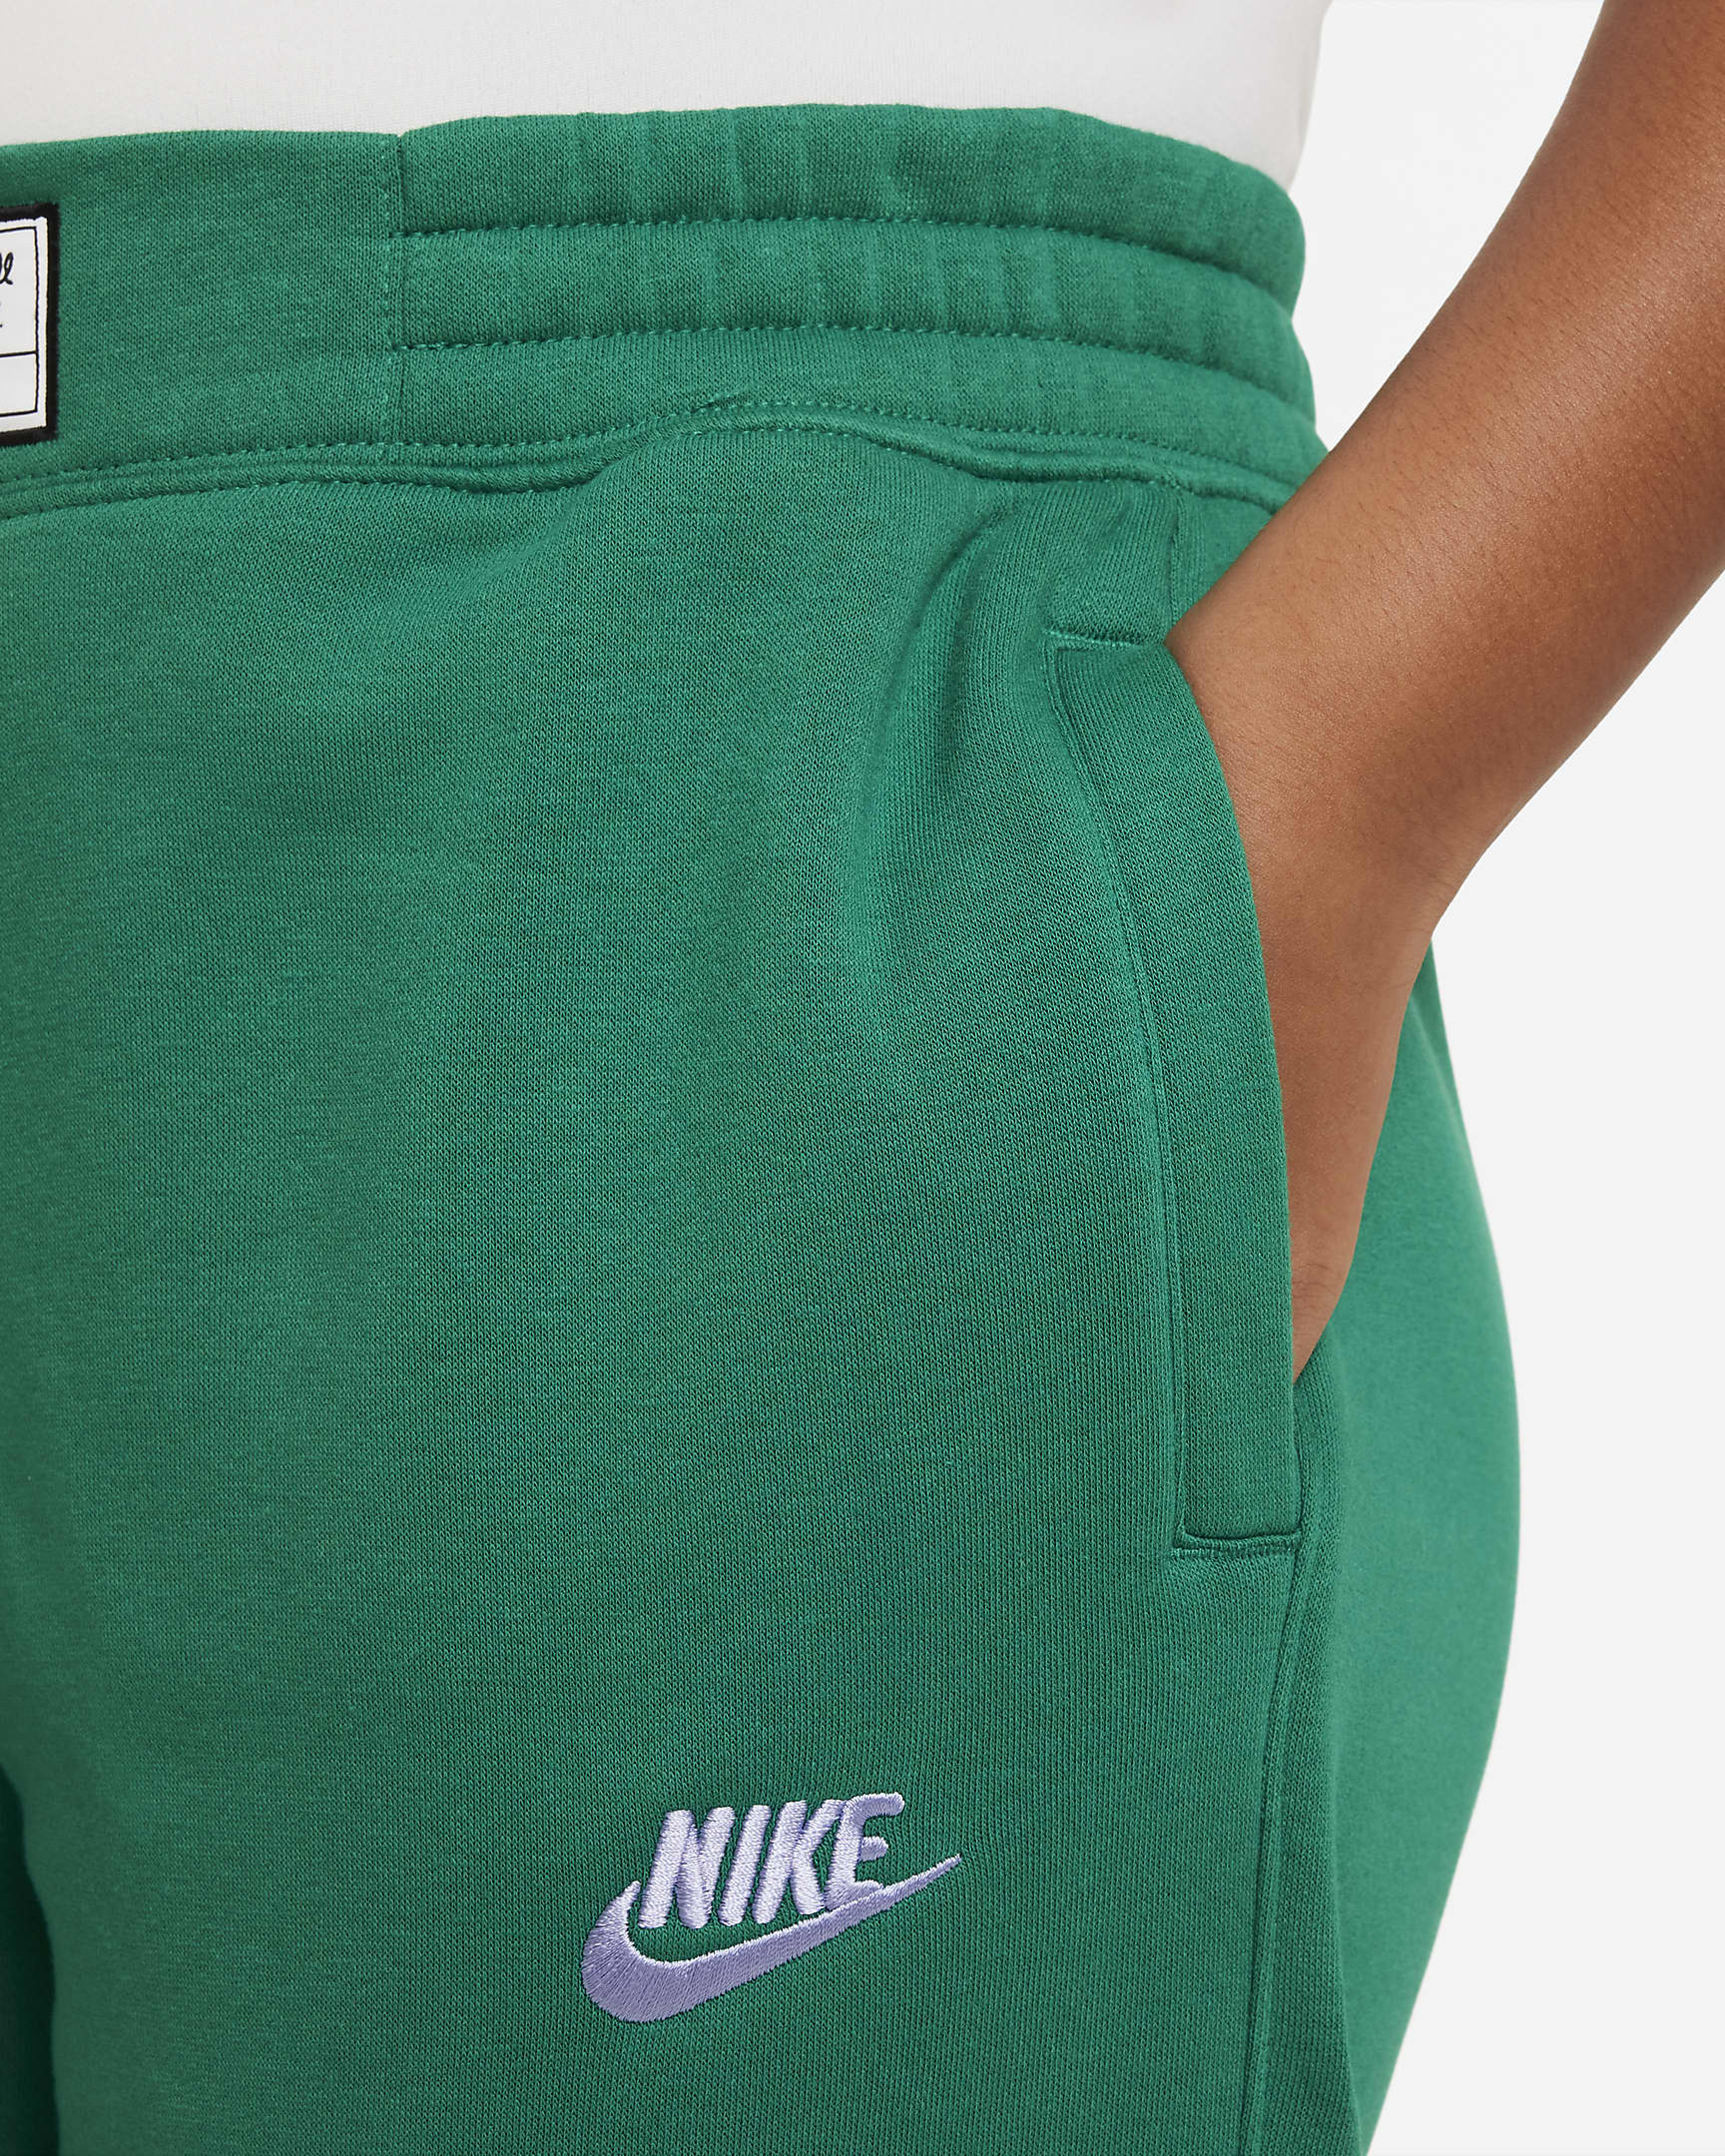 Pants para niño talla grande Nike Culture of Basketball (talla amplia ...